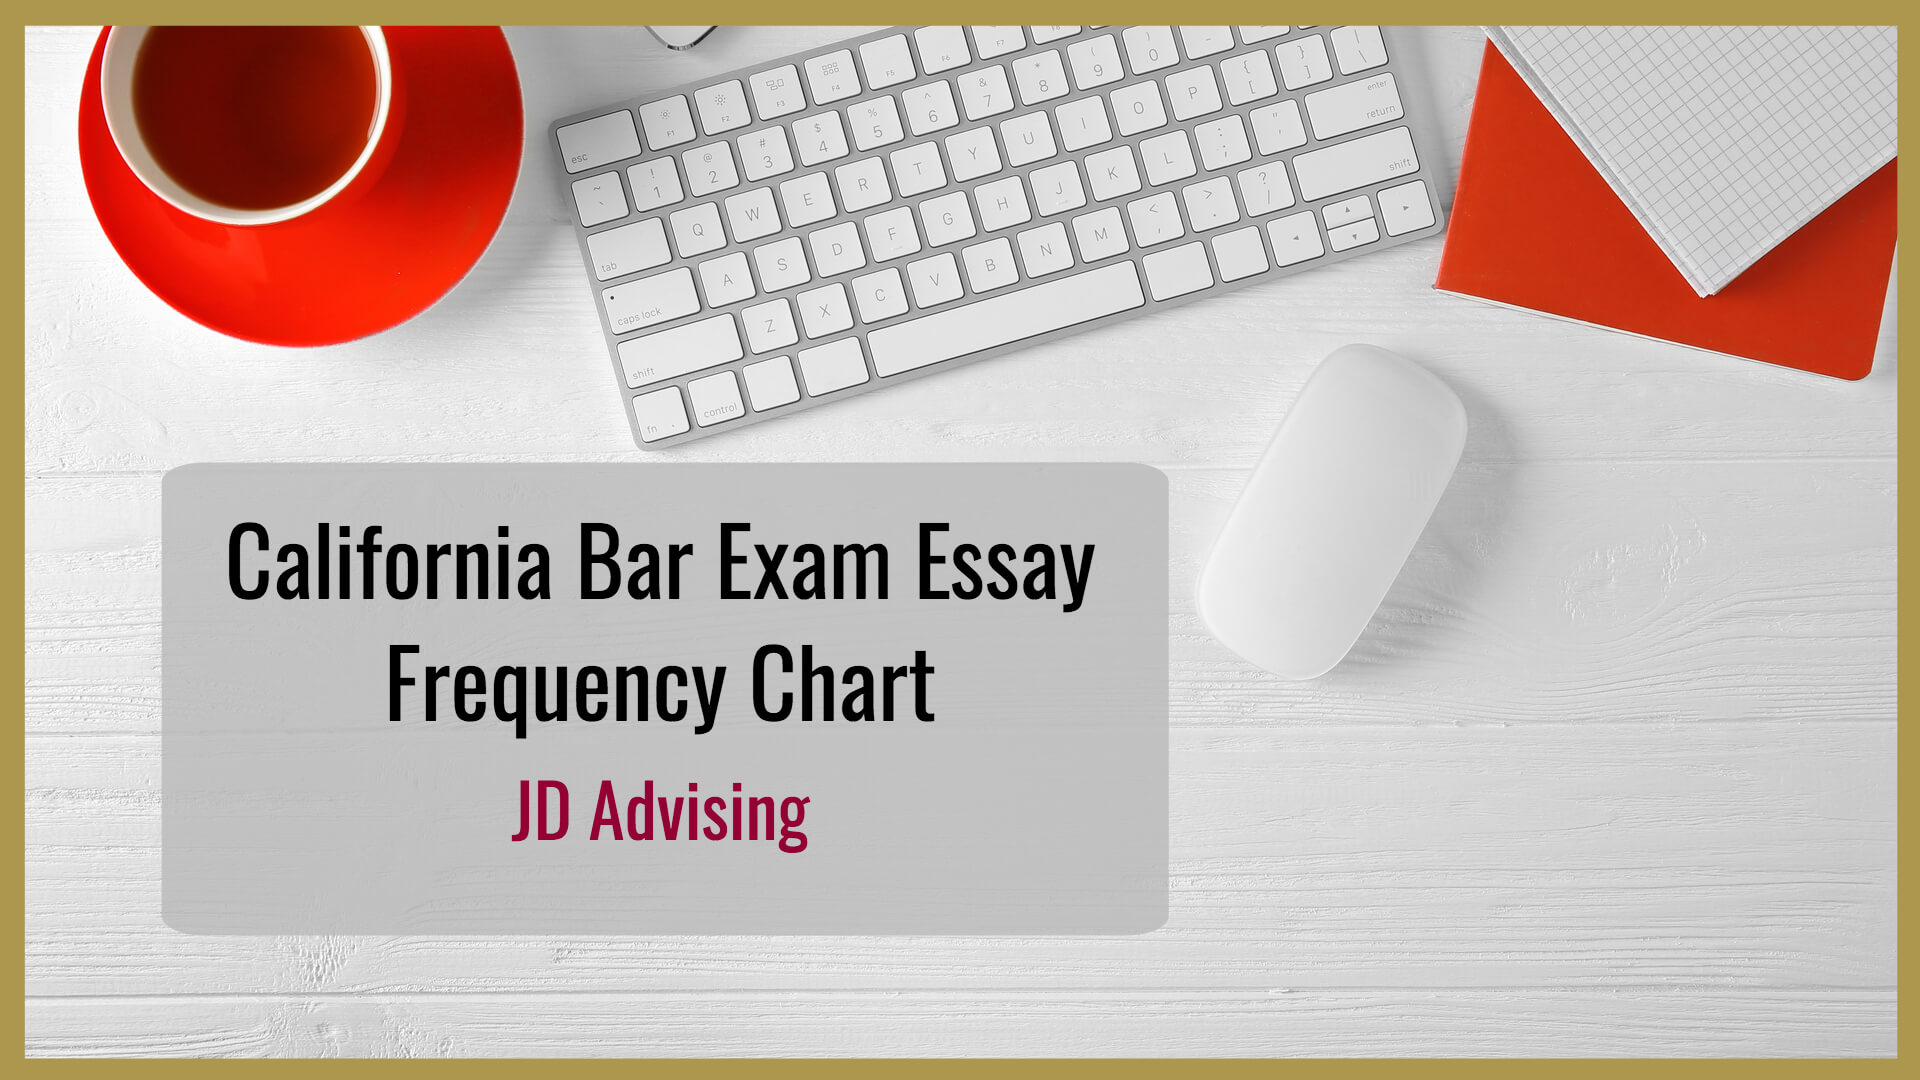 California Bar Exam Subject Frequency Chart